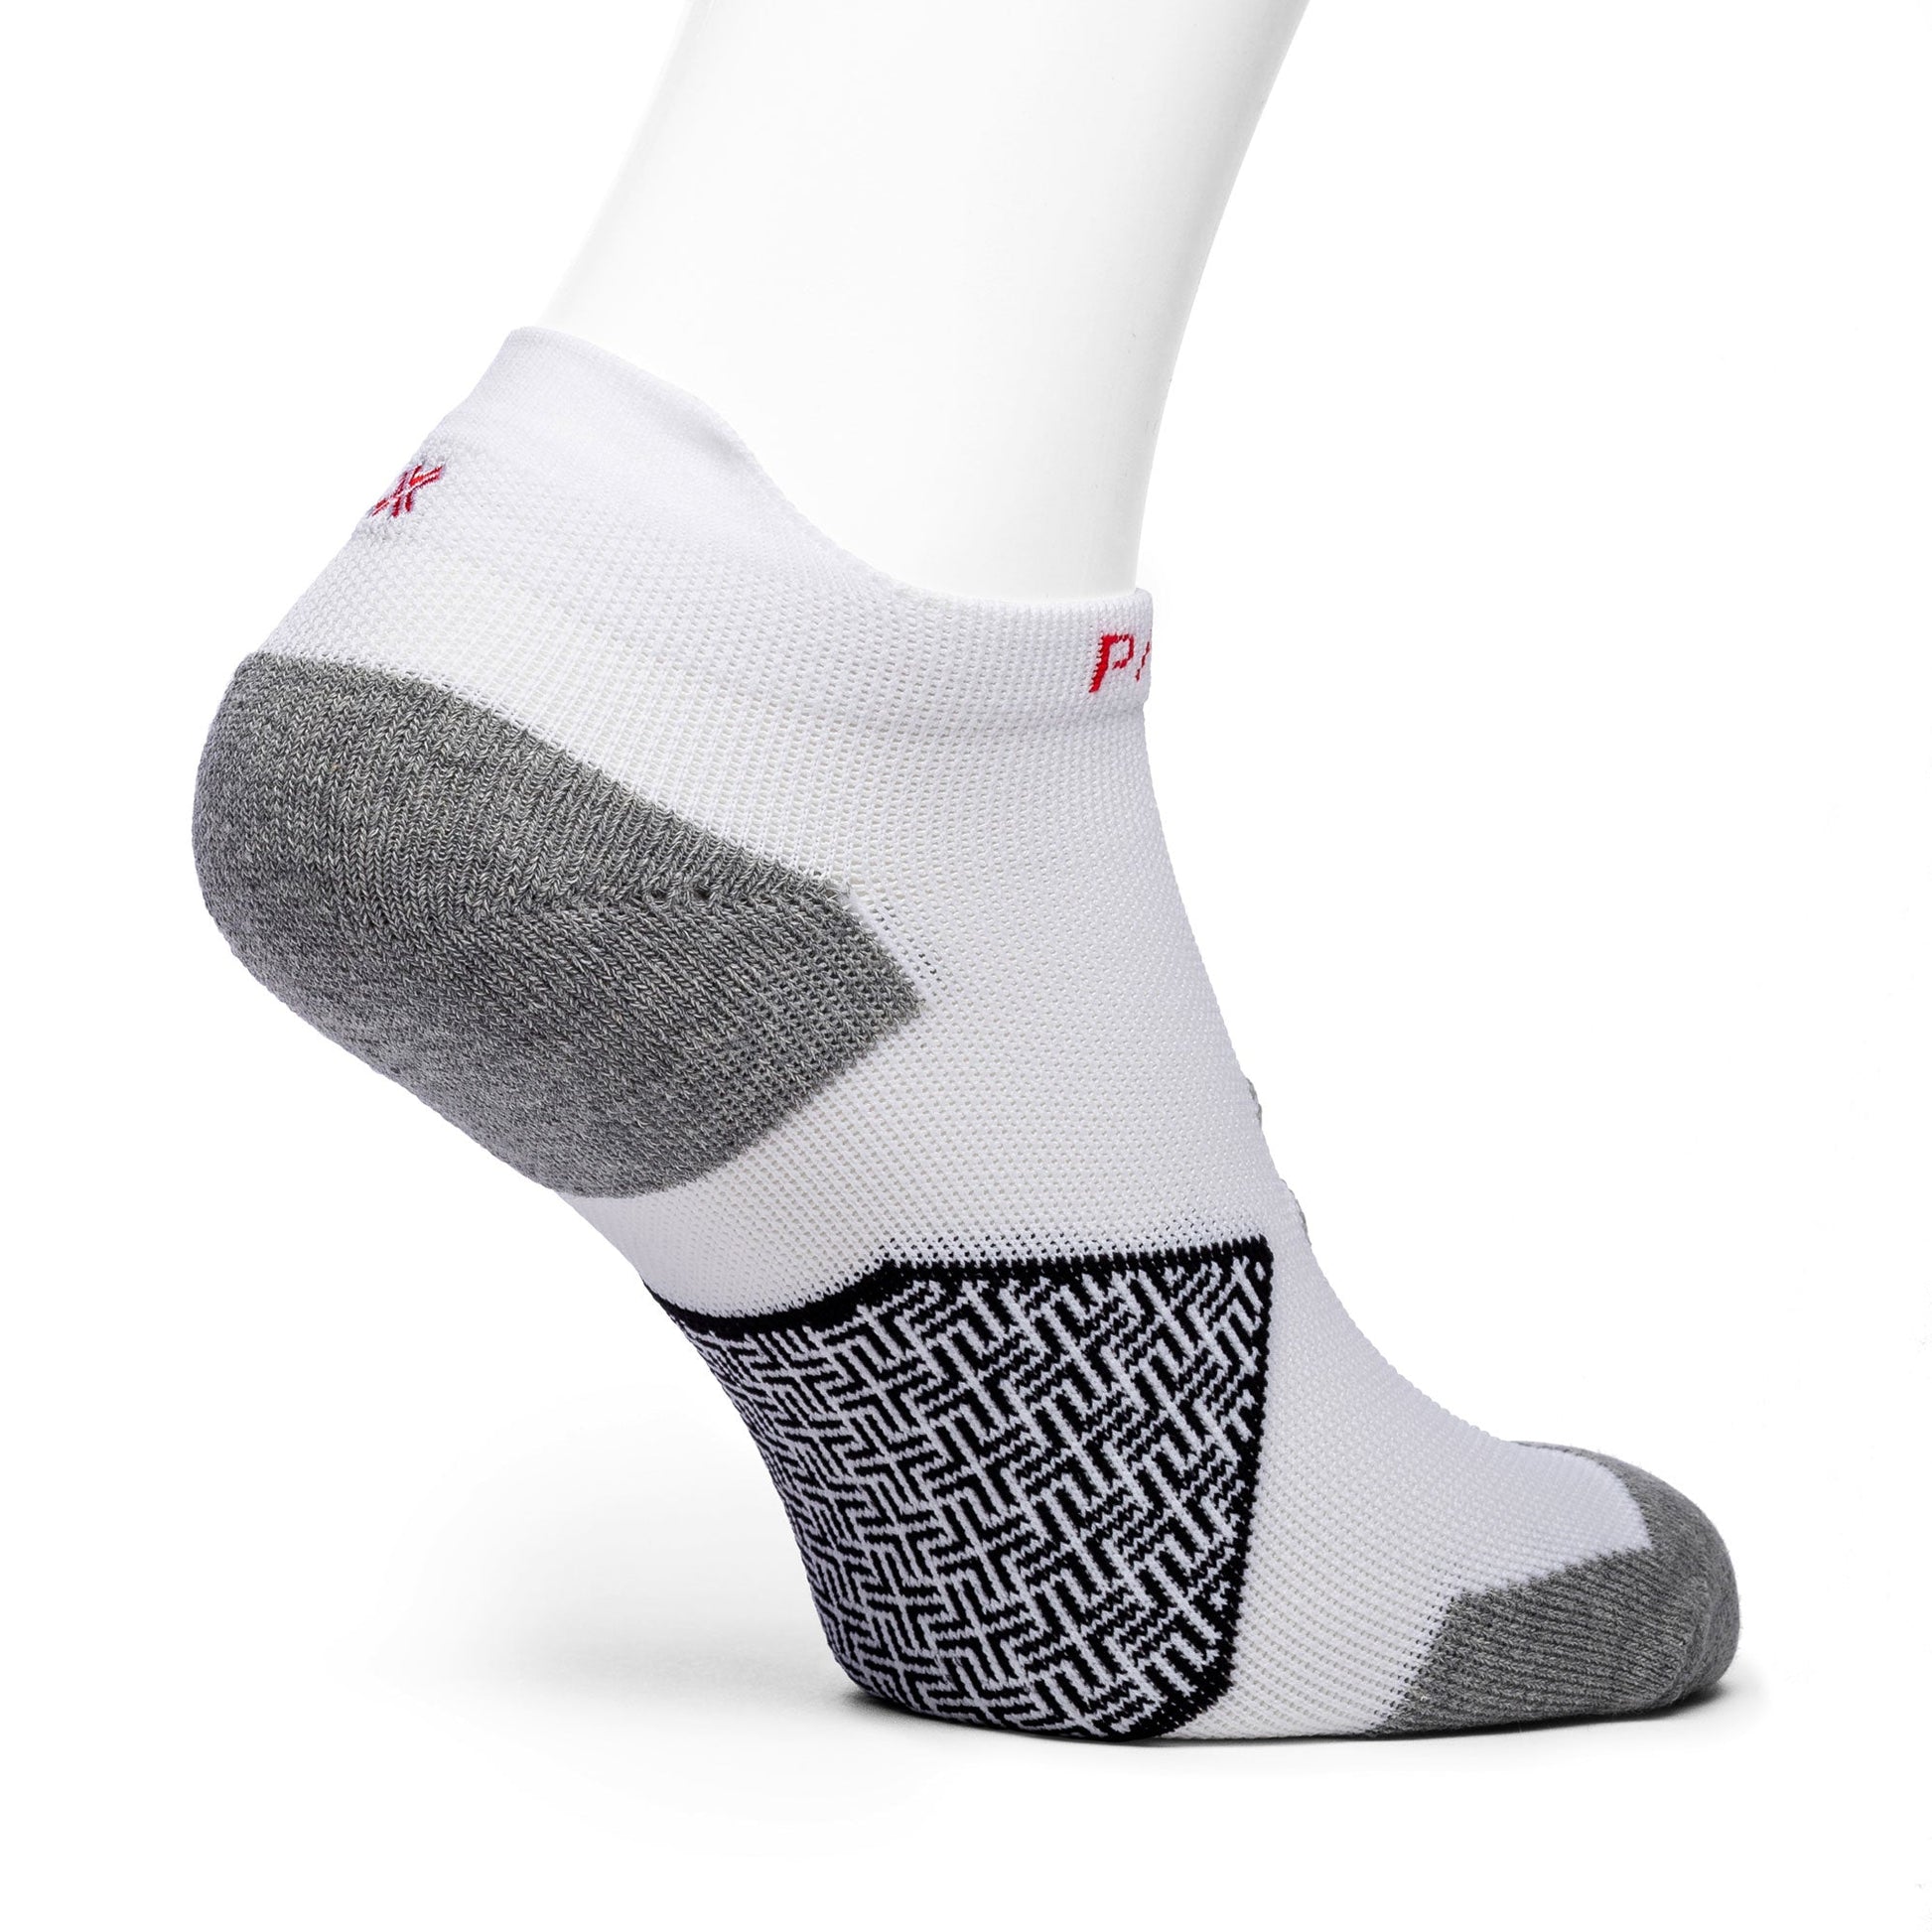 PAYNTR No Show Socks (White) - Heel